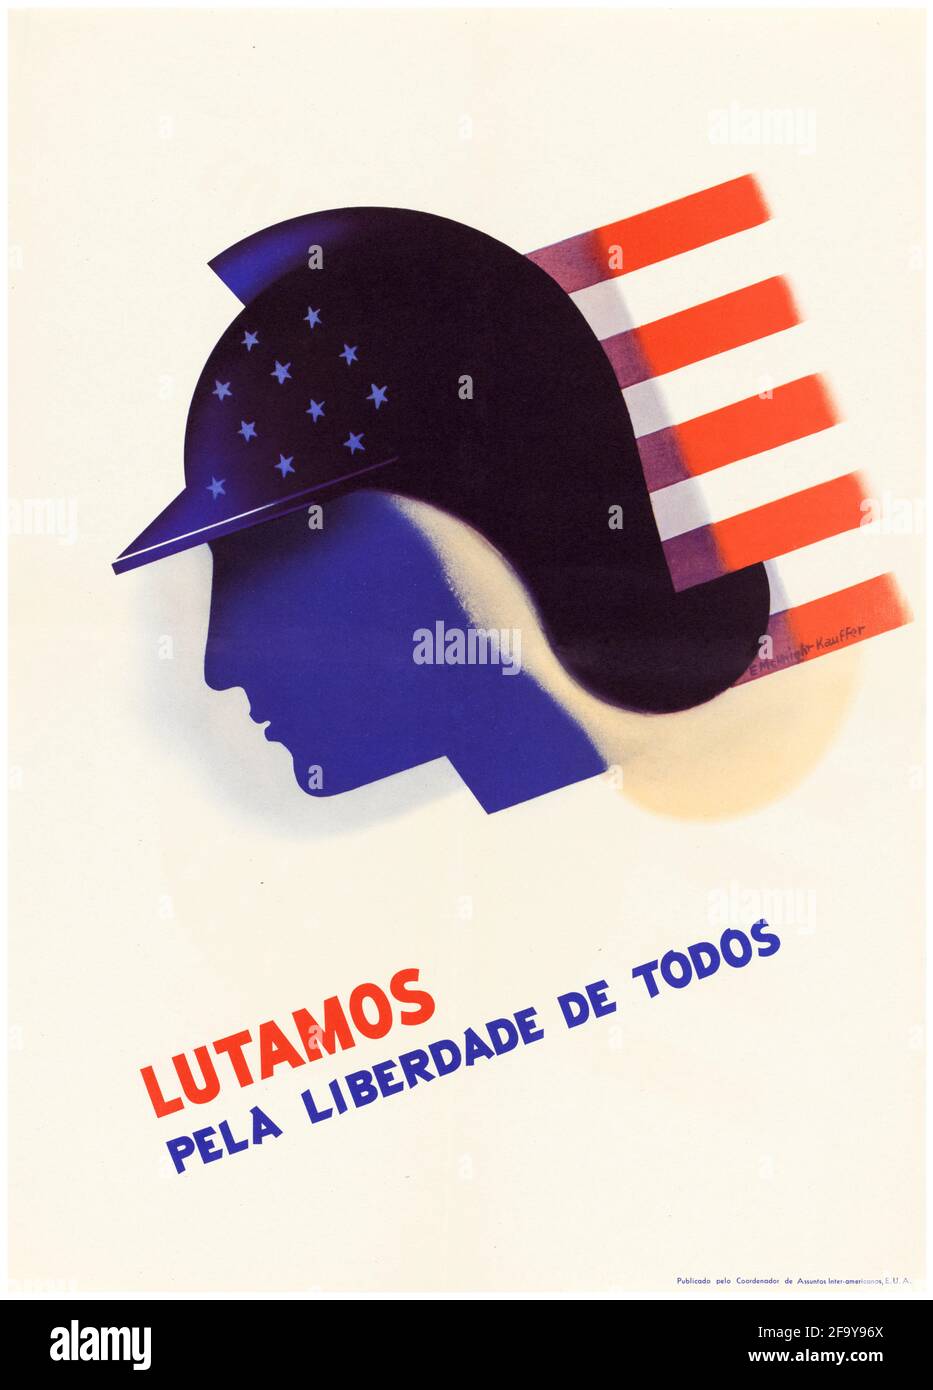 We fight, for the freedom of all (Lutamos pela liberdade de todos), South America and American, WW2 OCIAA propaganda poster, 1942-1945 Stock Photo